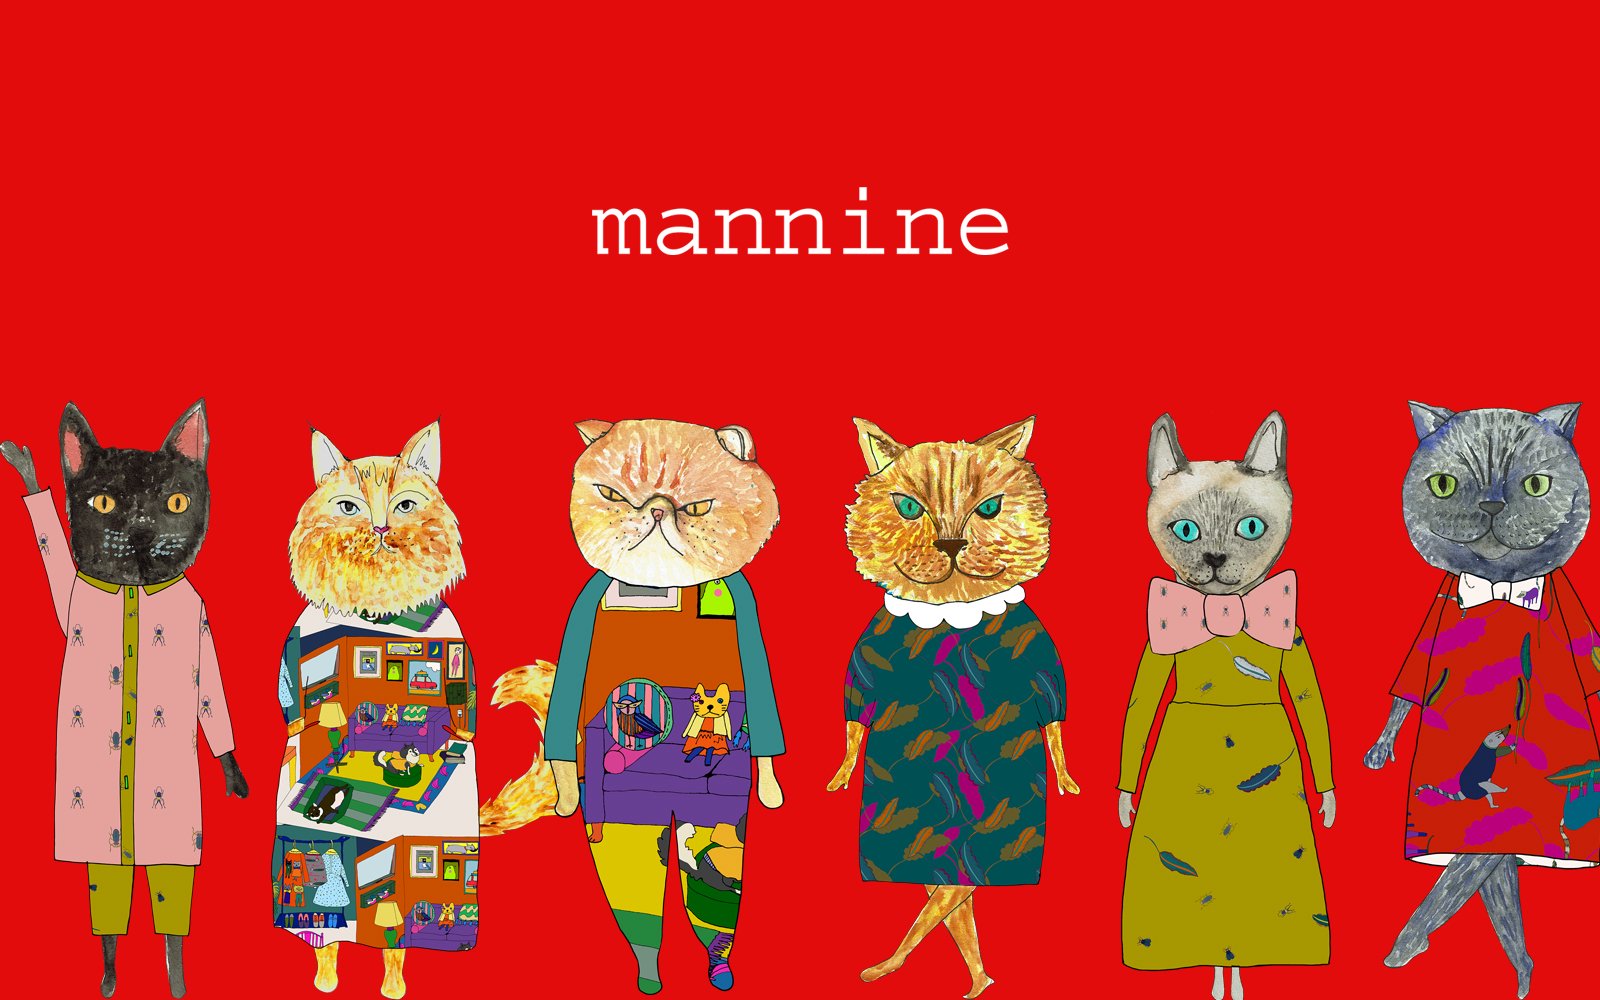 mannine マンナイン manri kishimoto - 北欧雑貨と暮らしの道具lotta